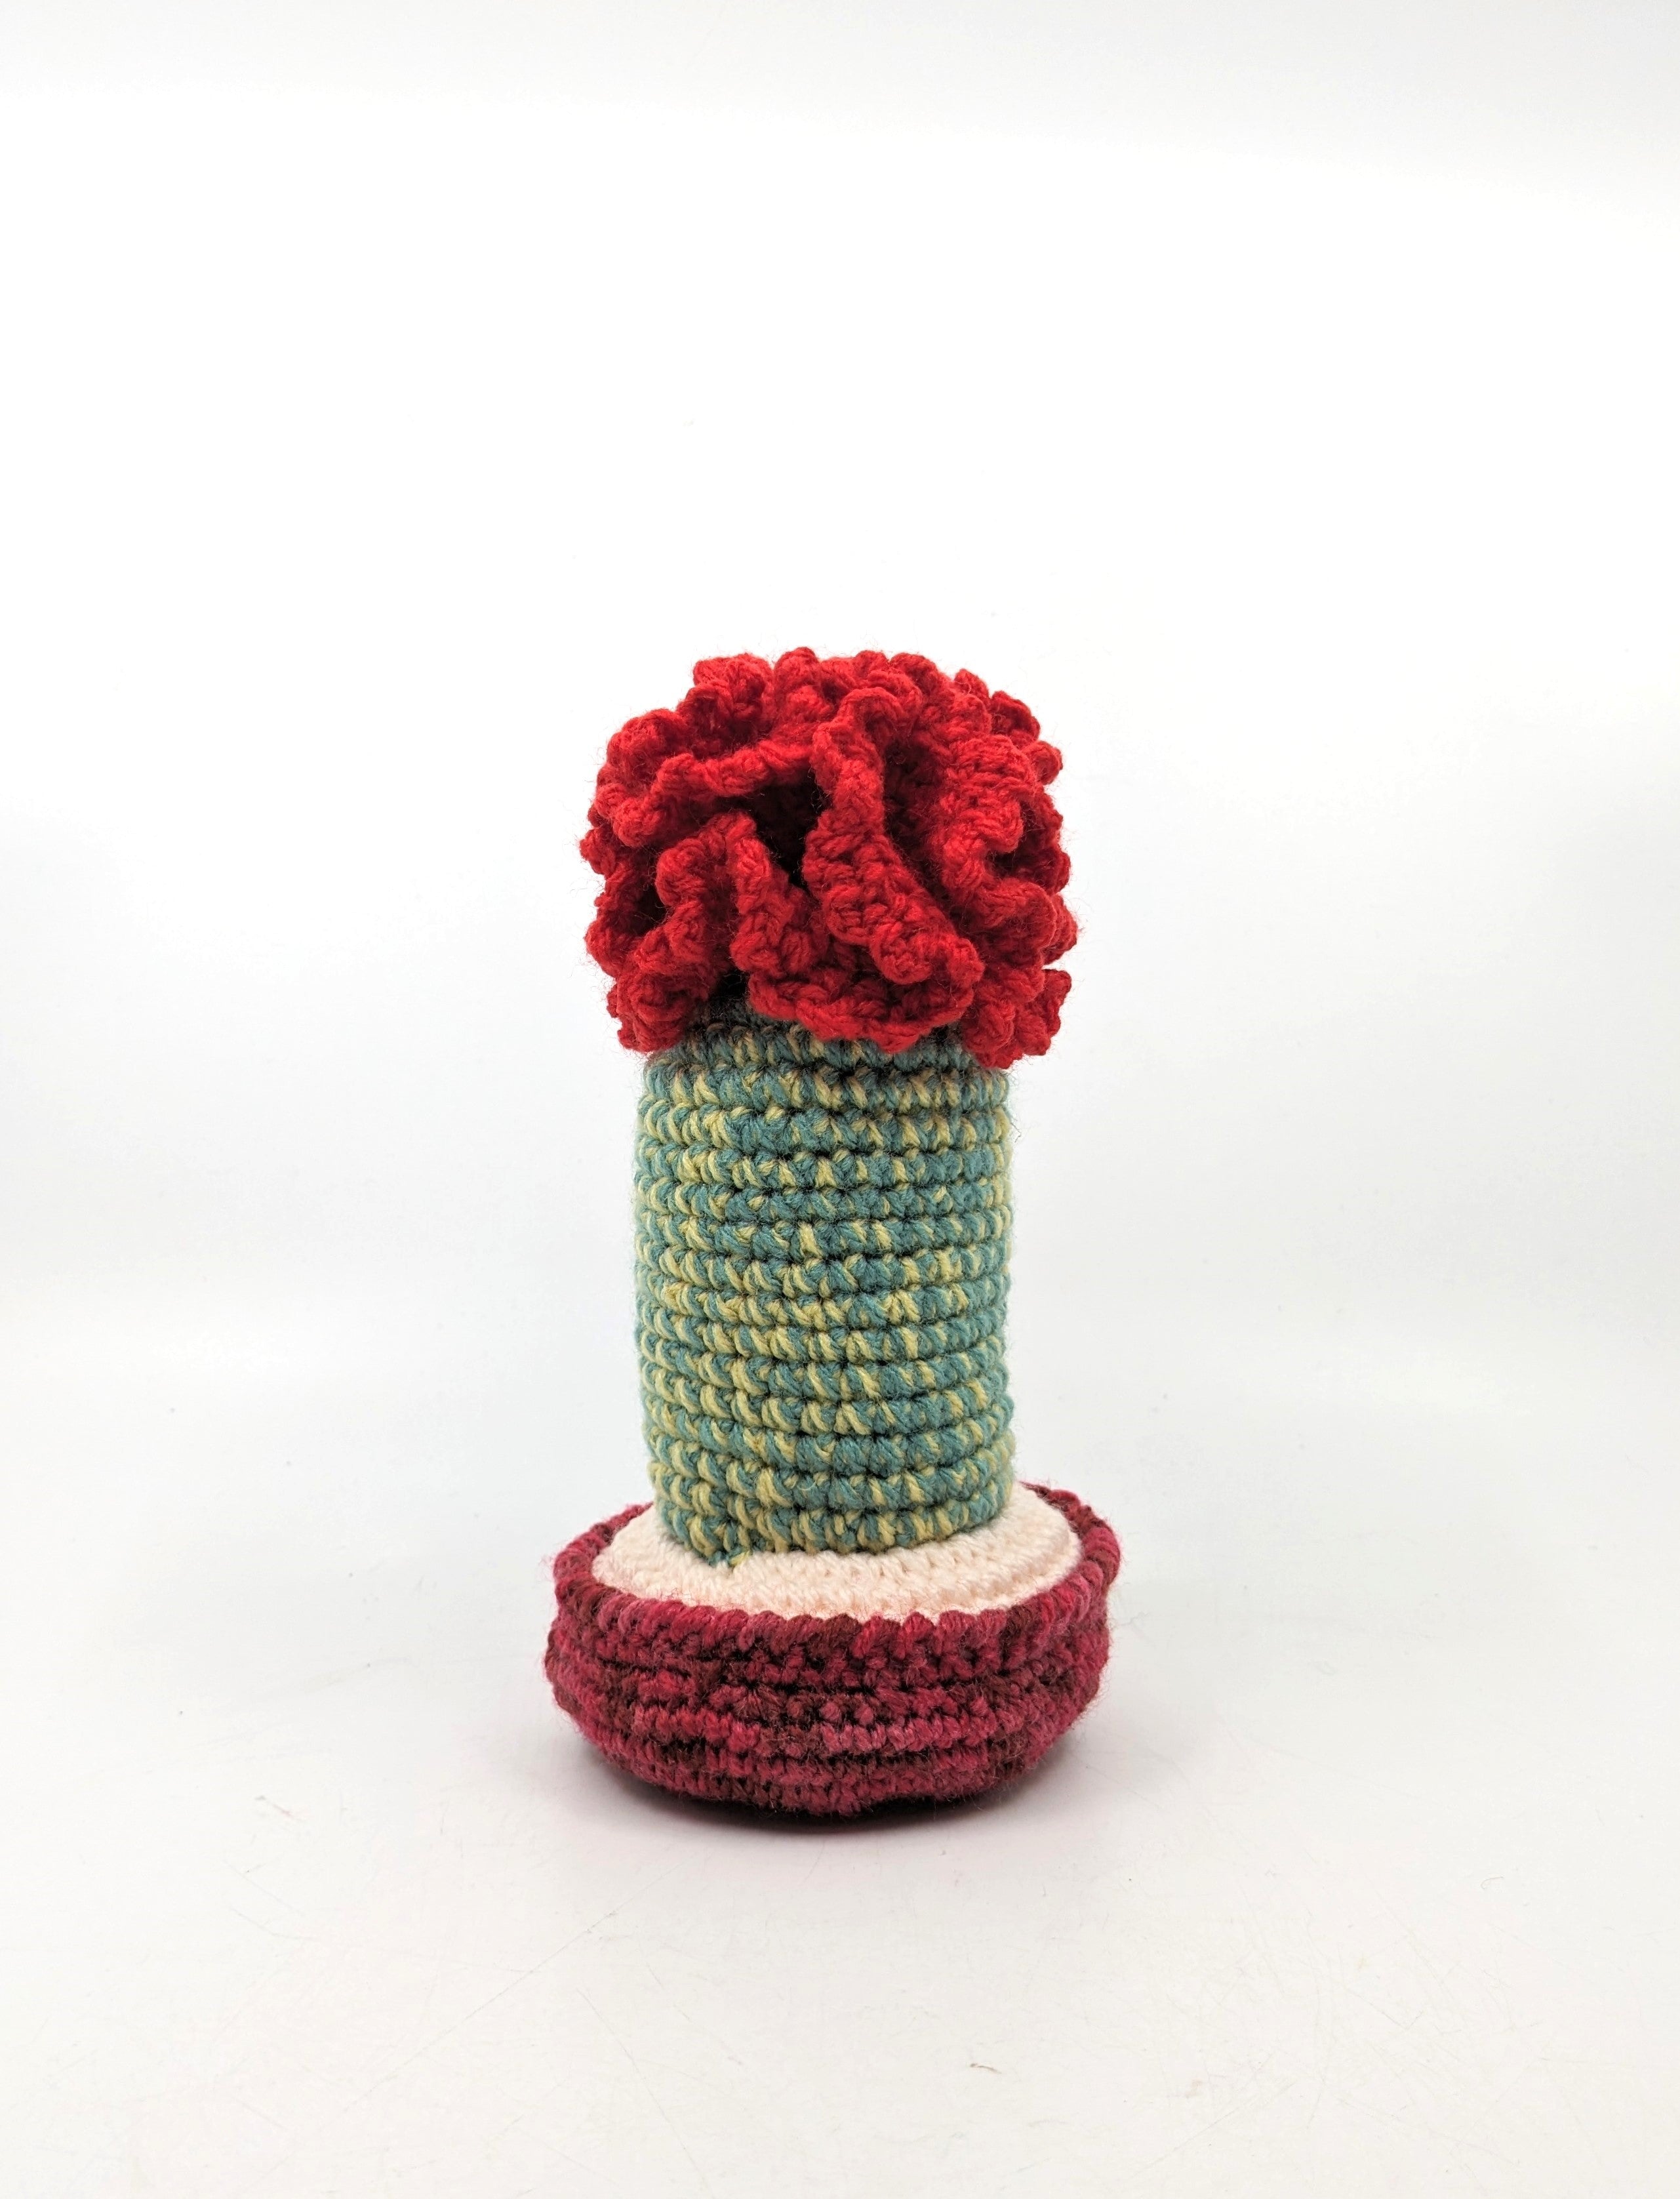 Assorted Cactuses - Millie Radovic